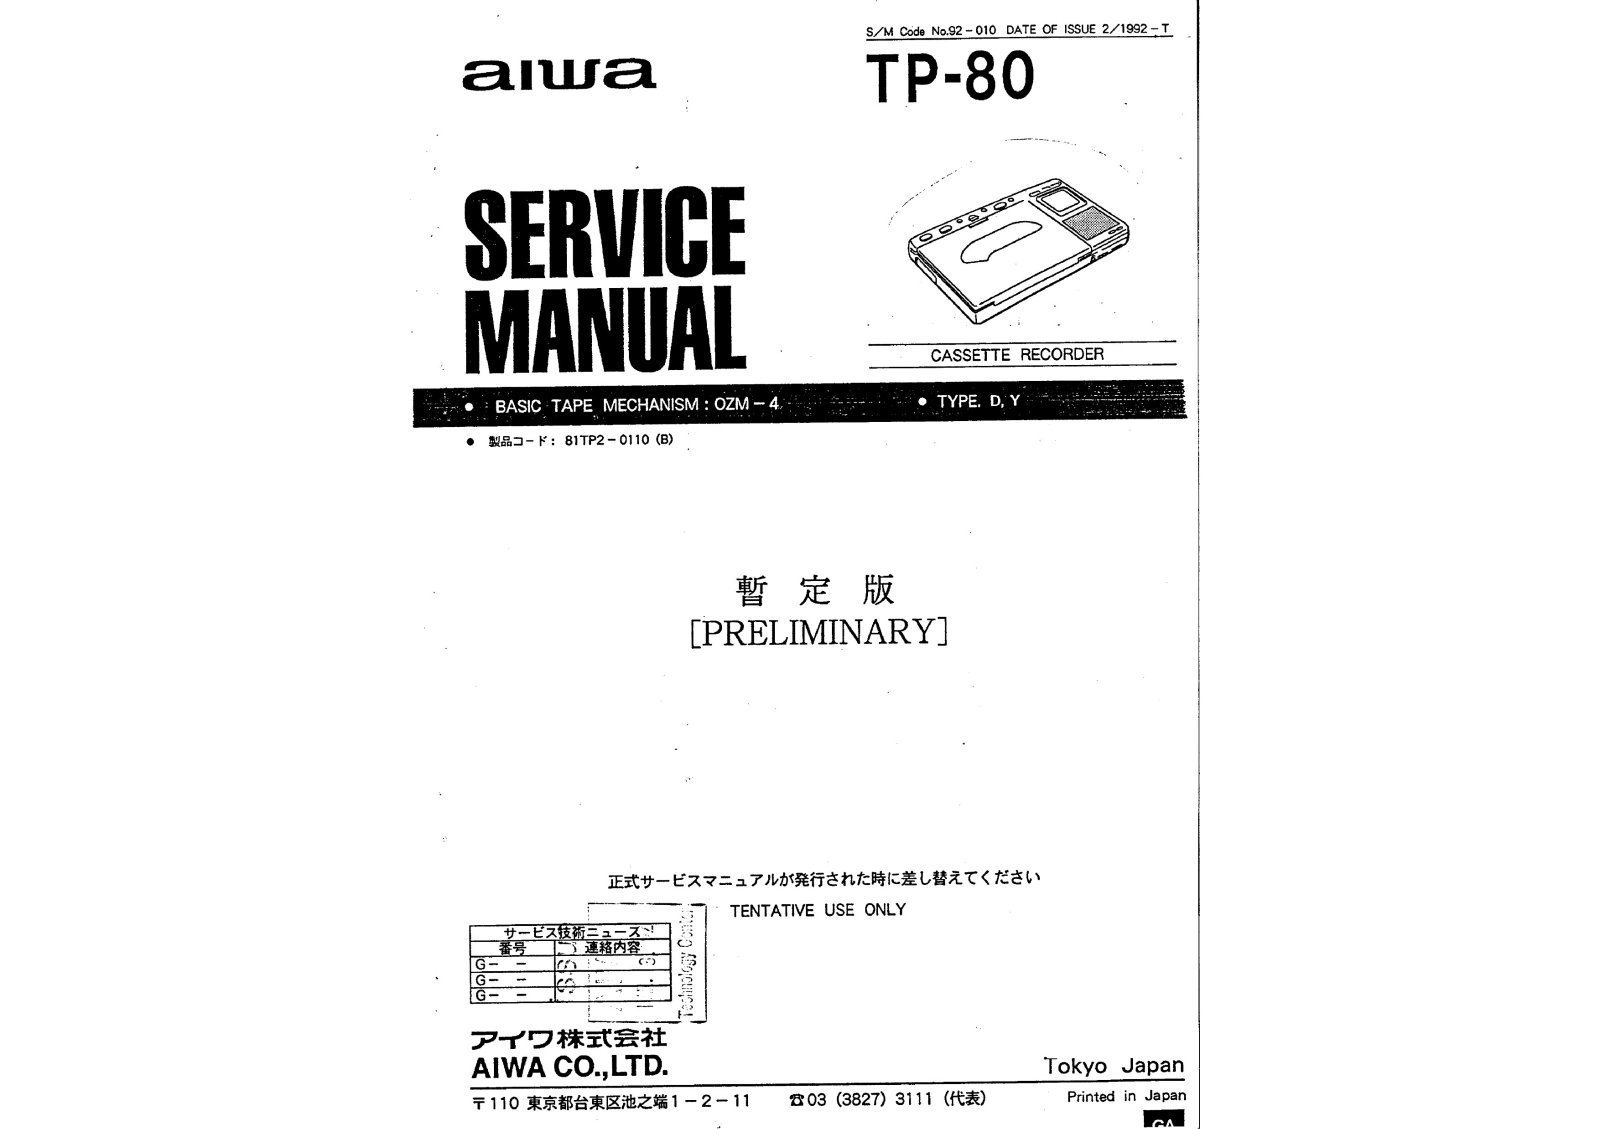 aiwa tp-80 User Manual